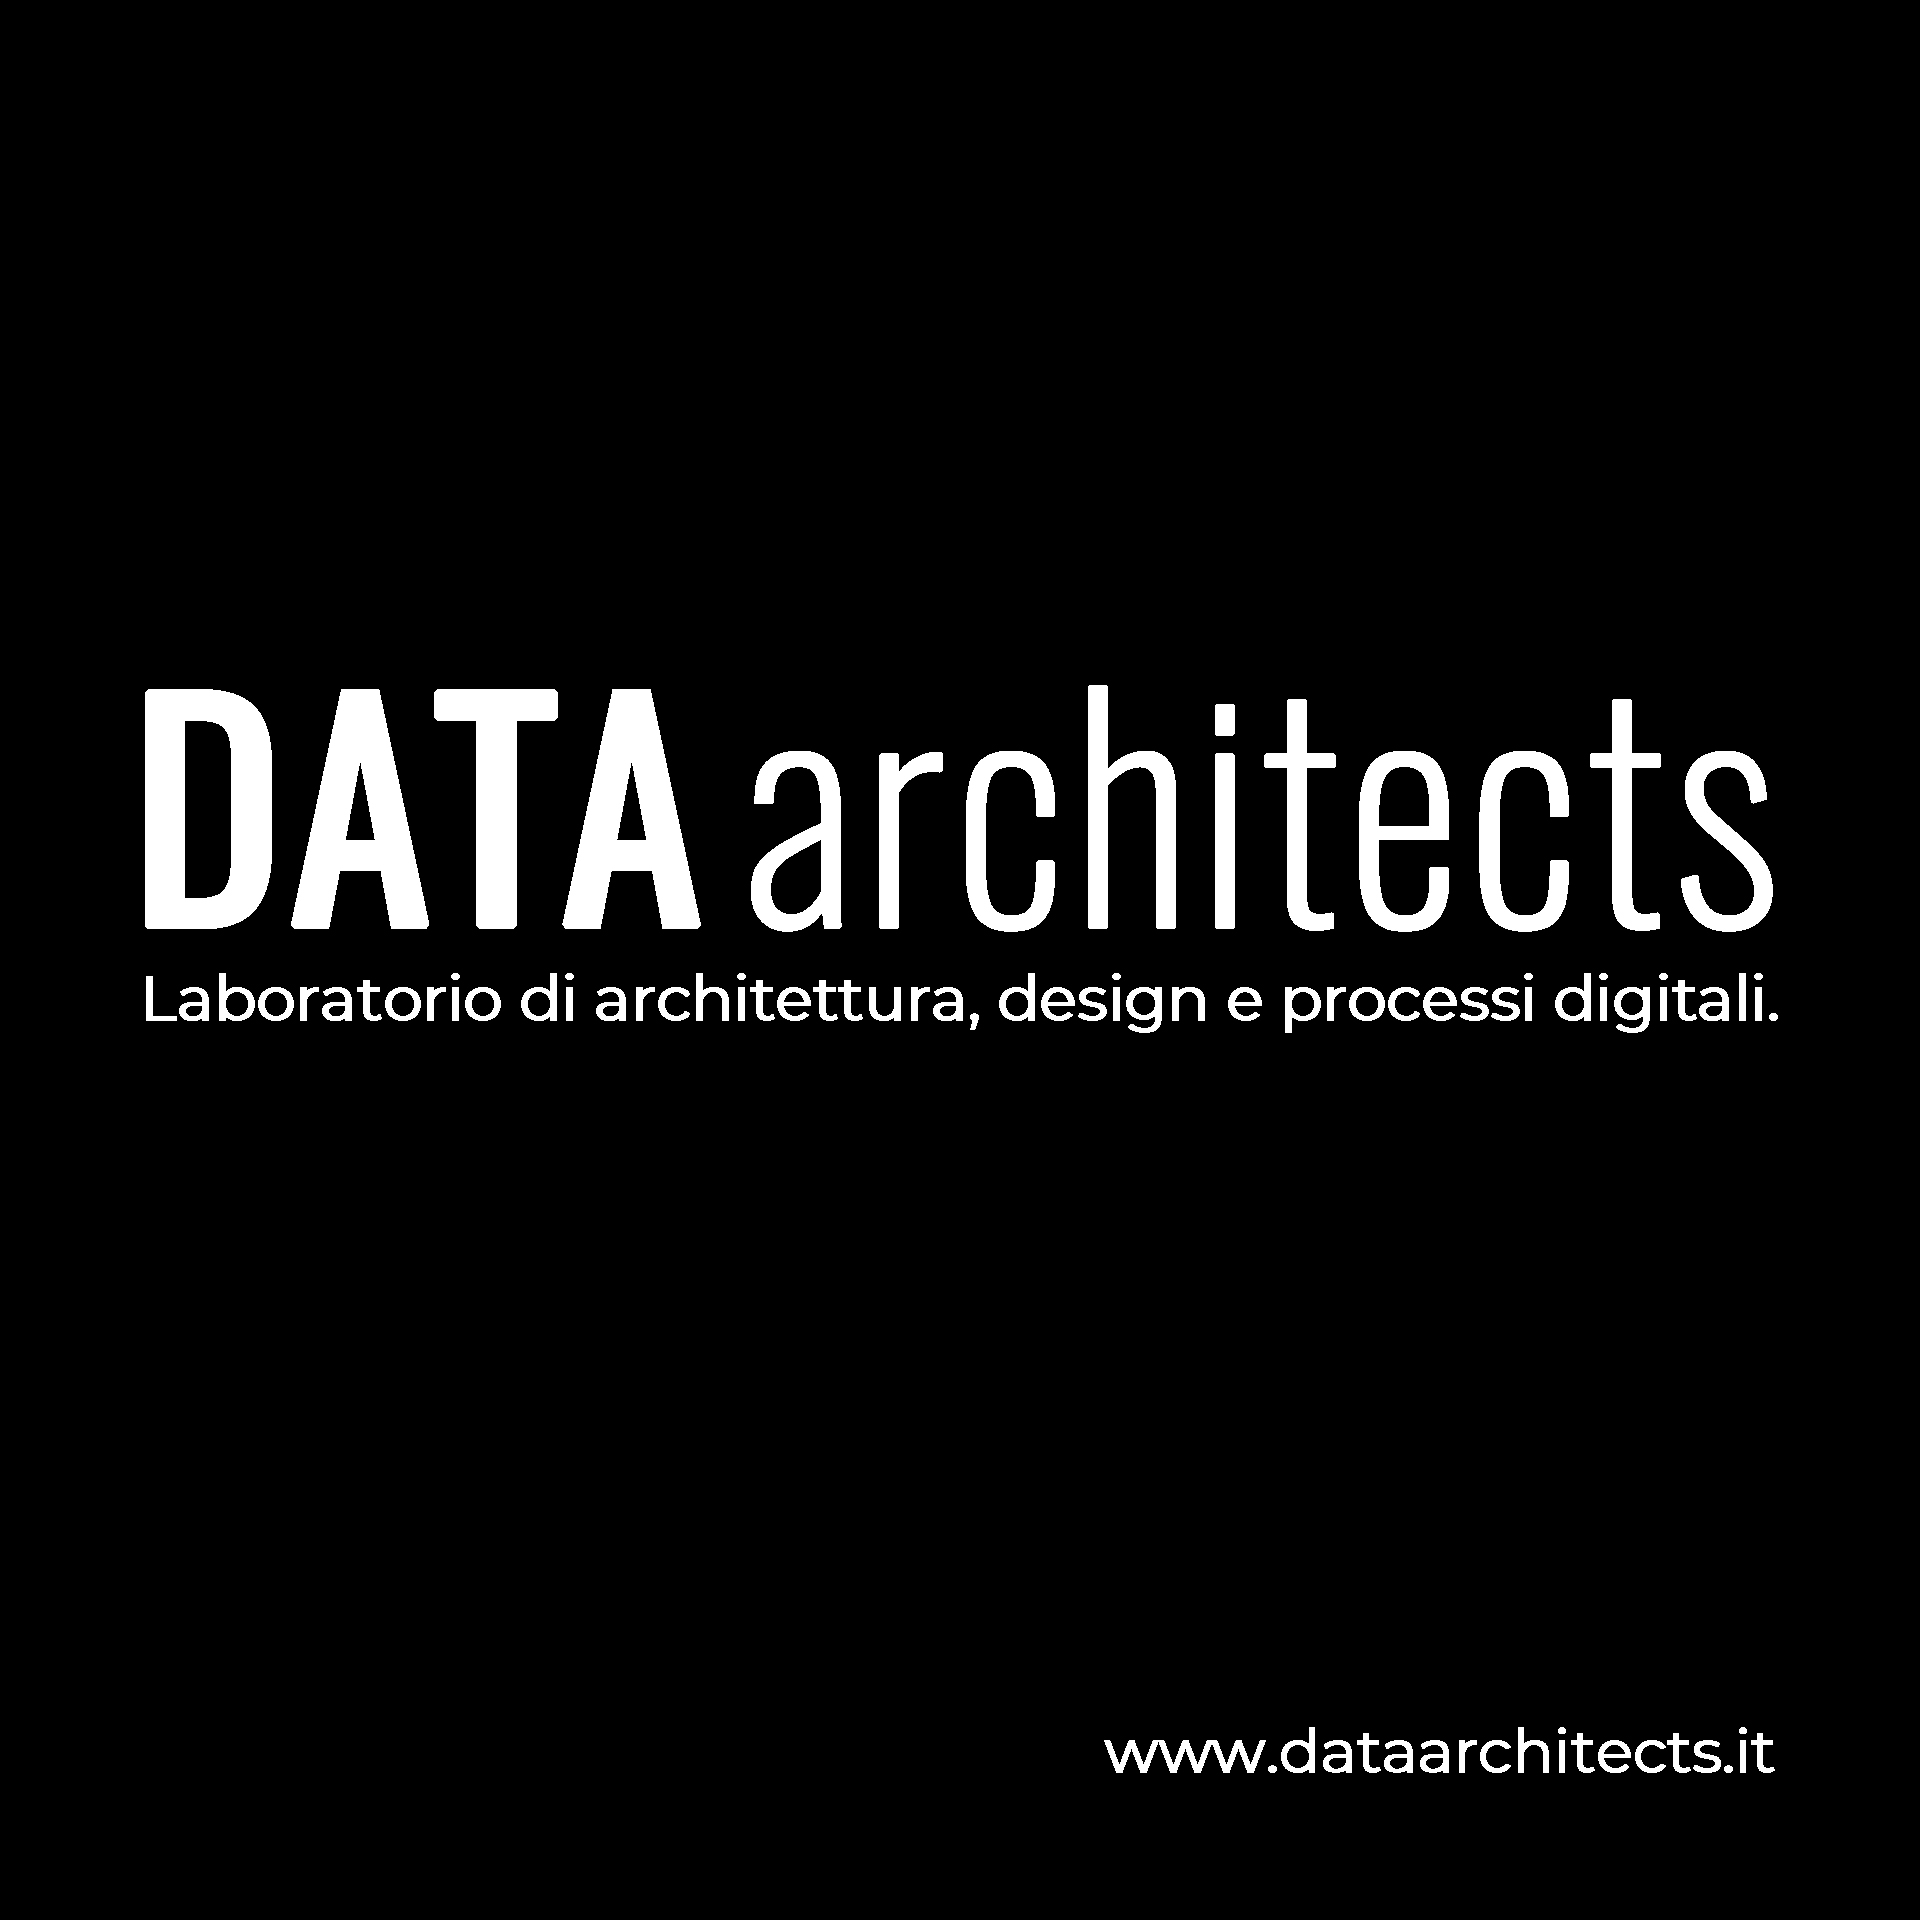 DATA architects